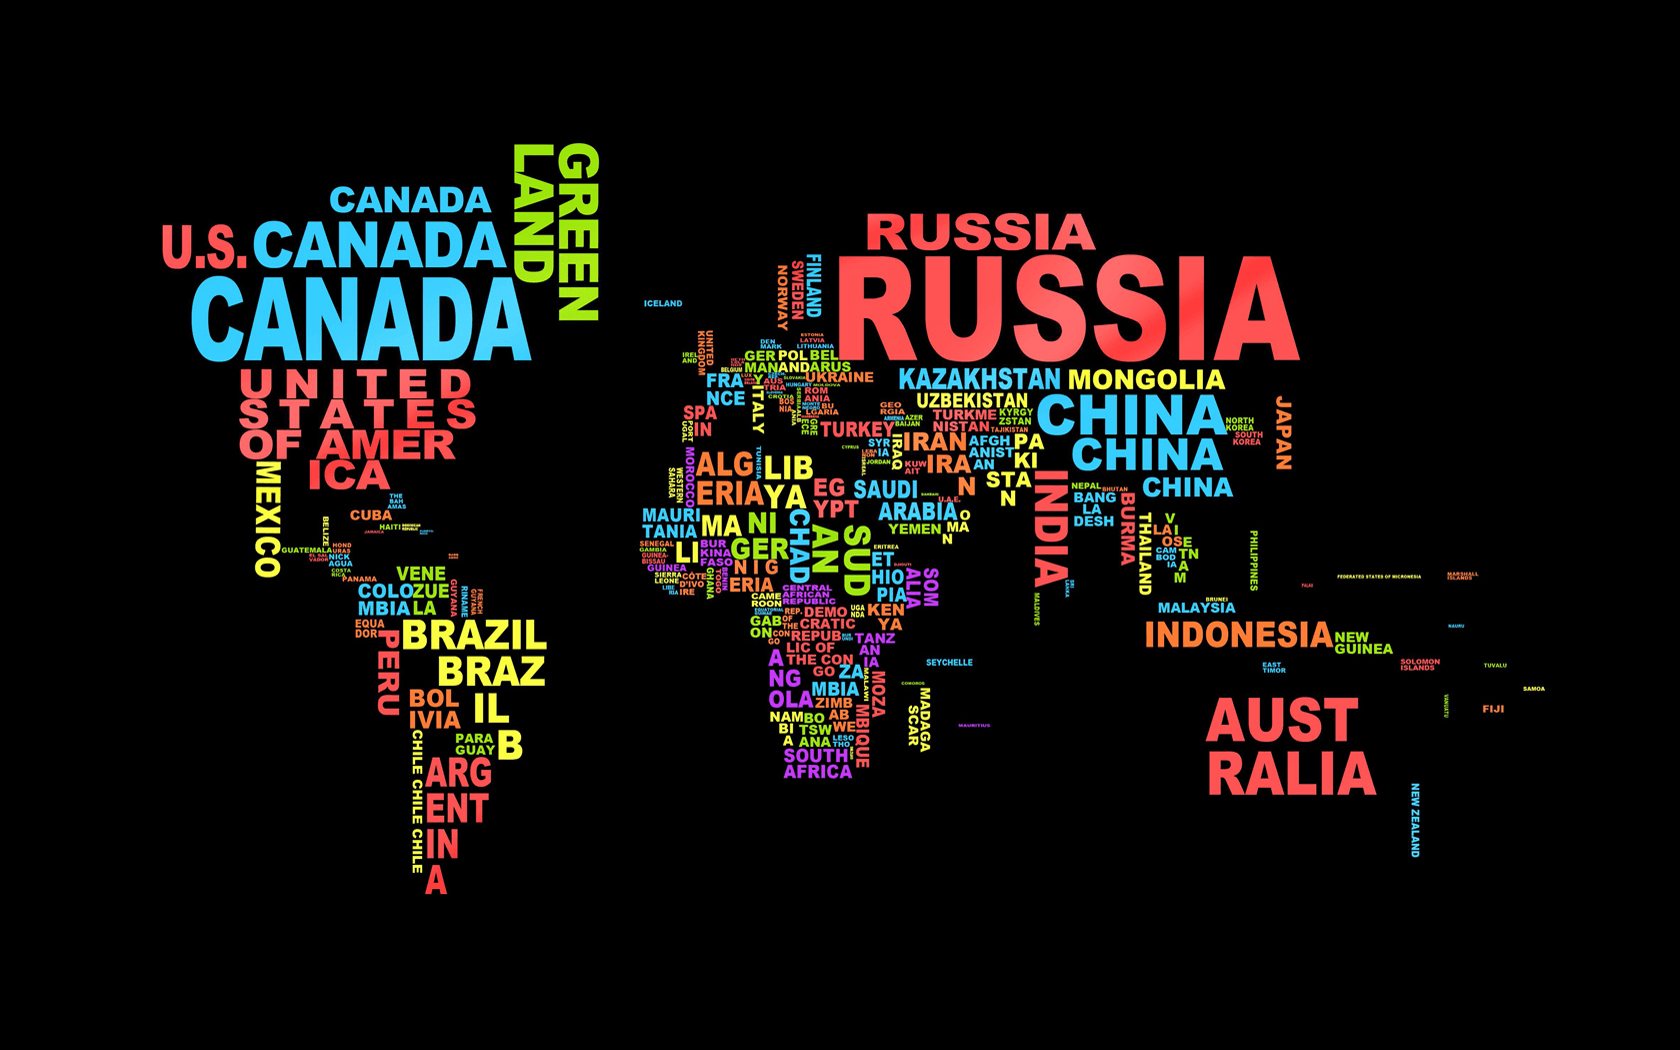 World Map Screensaver Wallpapers